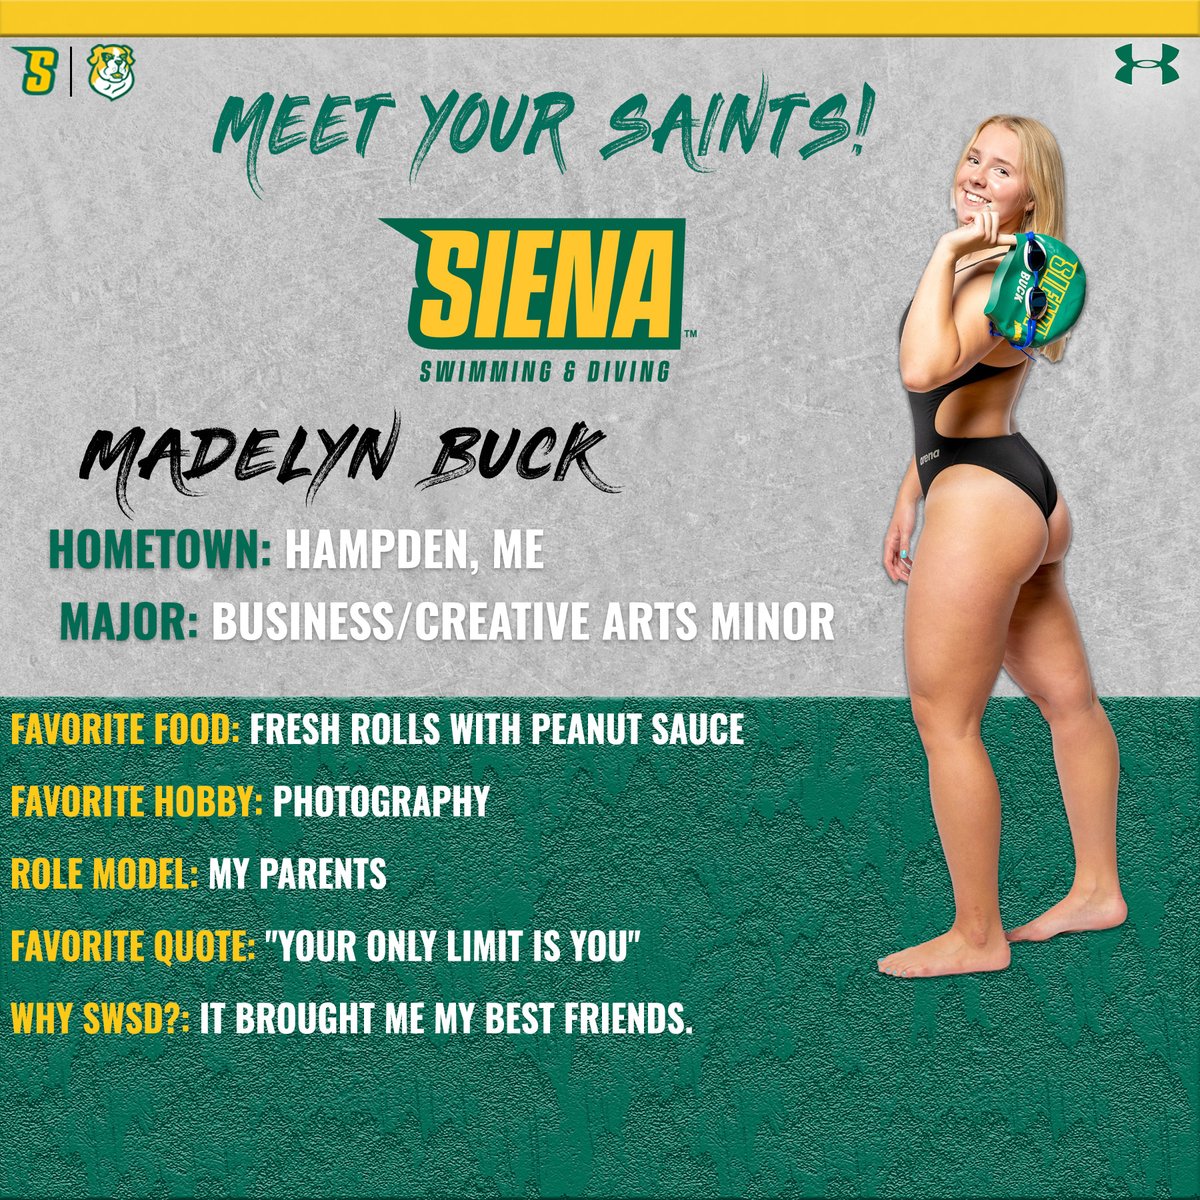 👋 MEET YOUR RETURNING SAINTS 👋

Get to know rising senior Maddie Buck!

#MarchOn x #SienaSaints